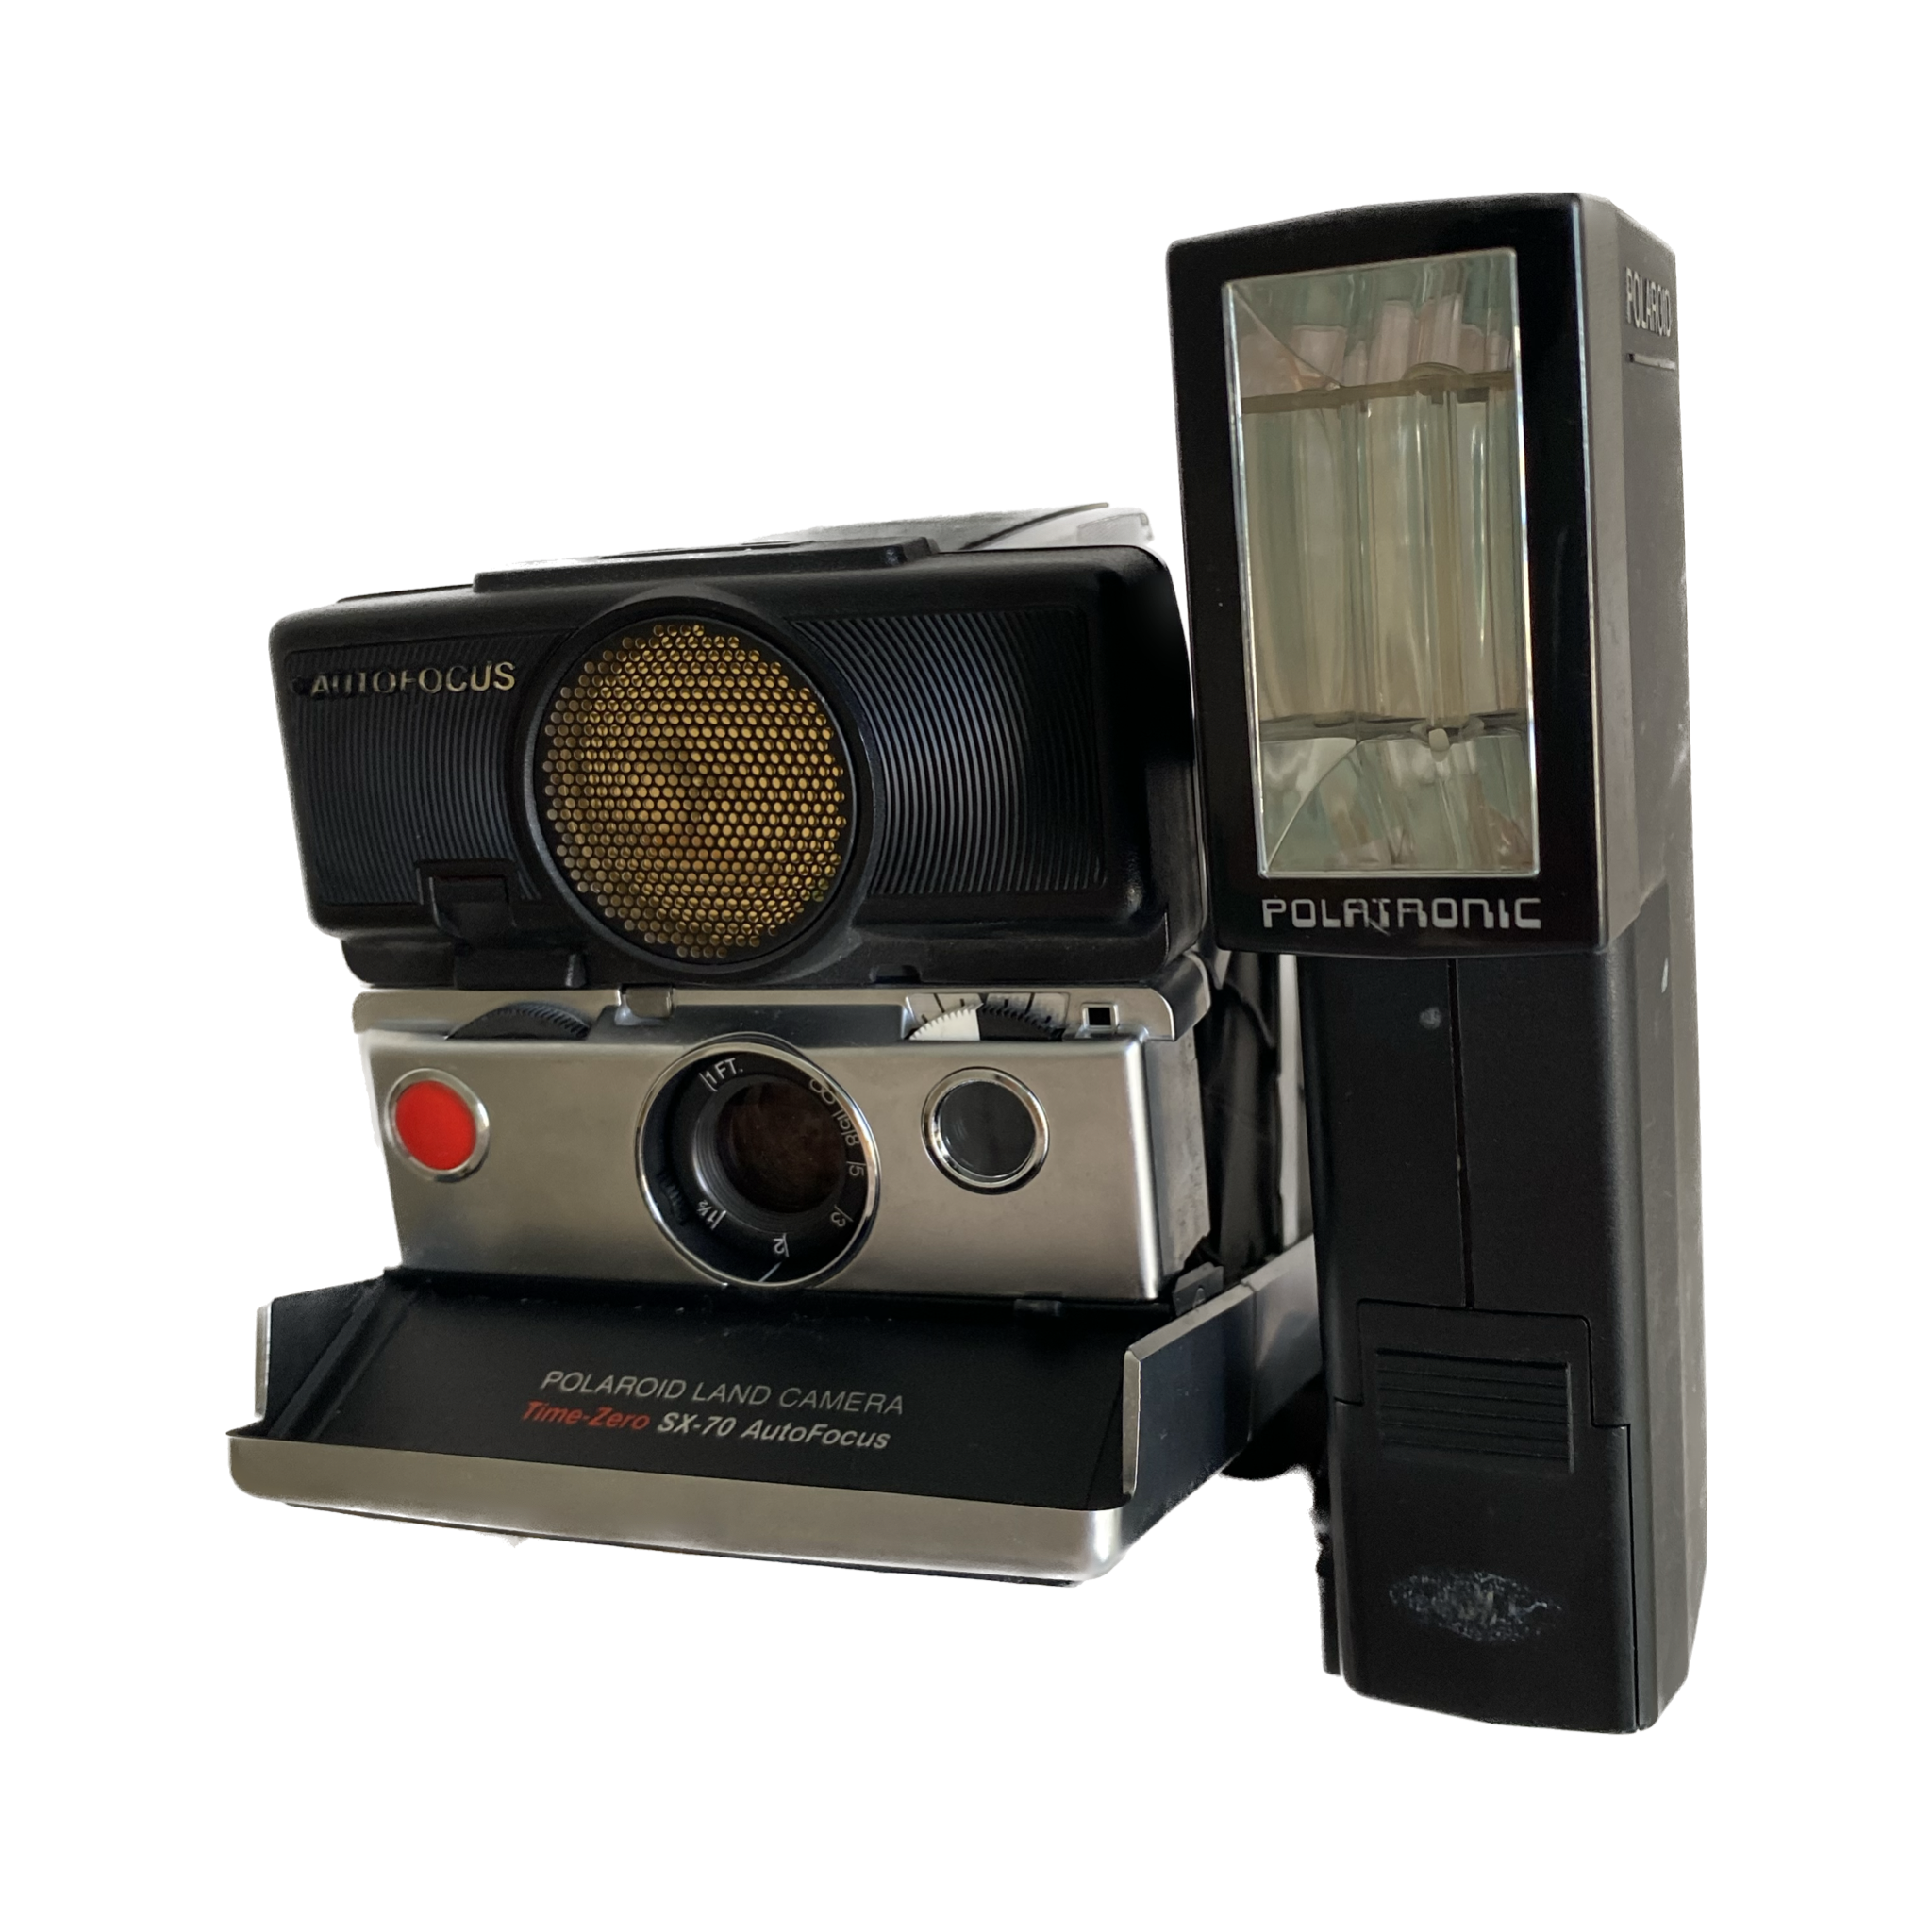 Polaroid SX-70 land camera + polaroid flash used instant camera